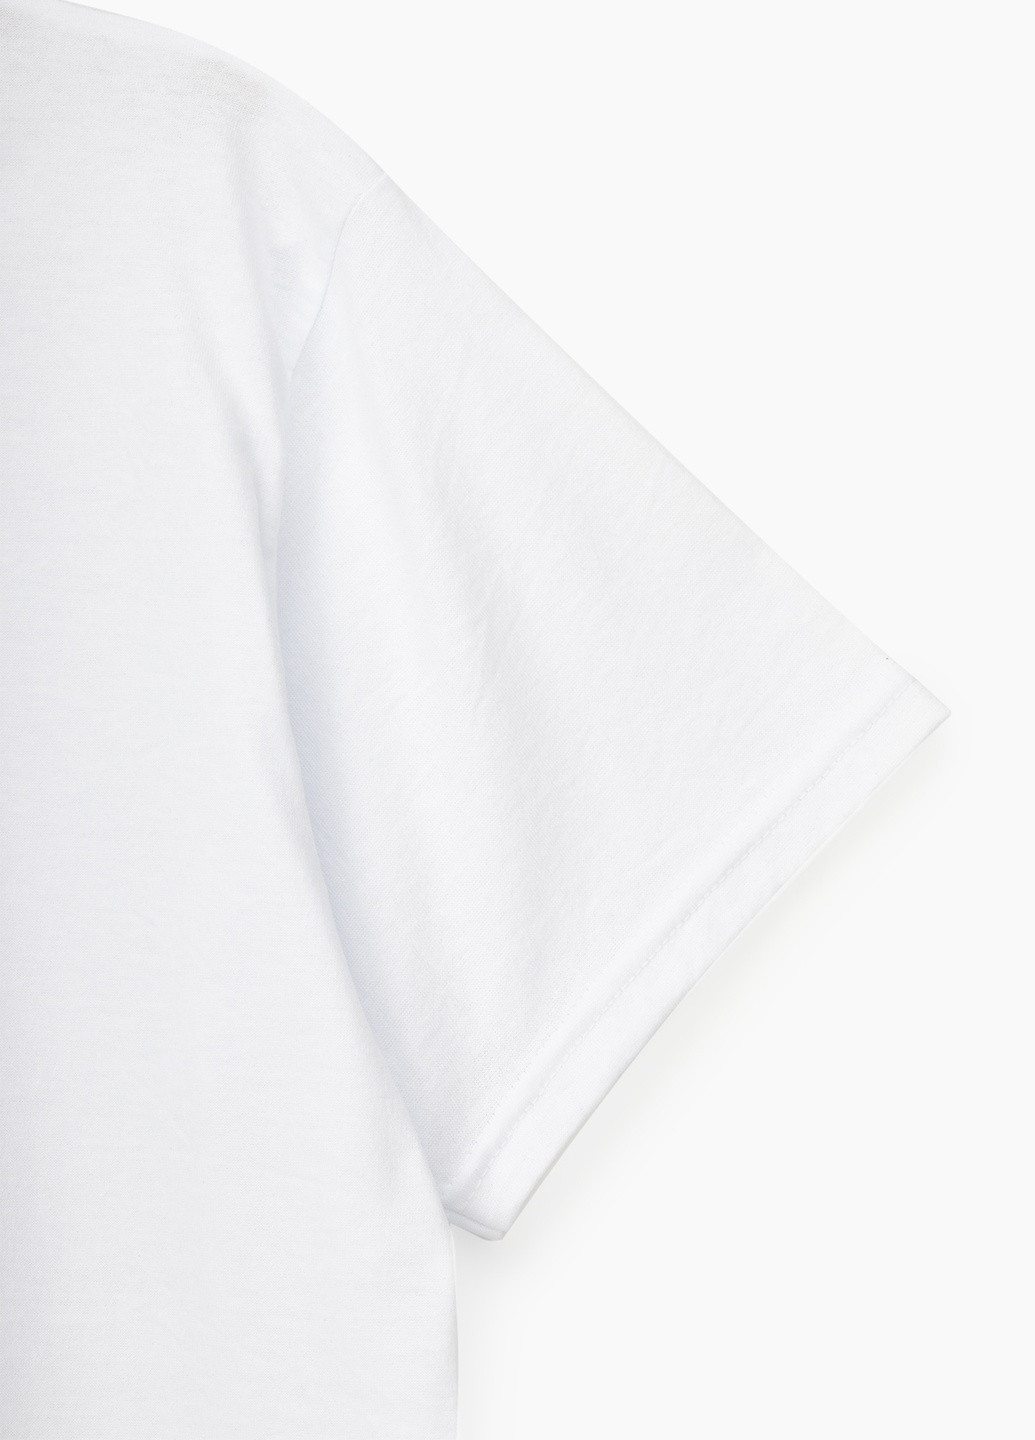 Белая белье-футболка Doruk